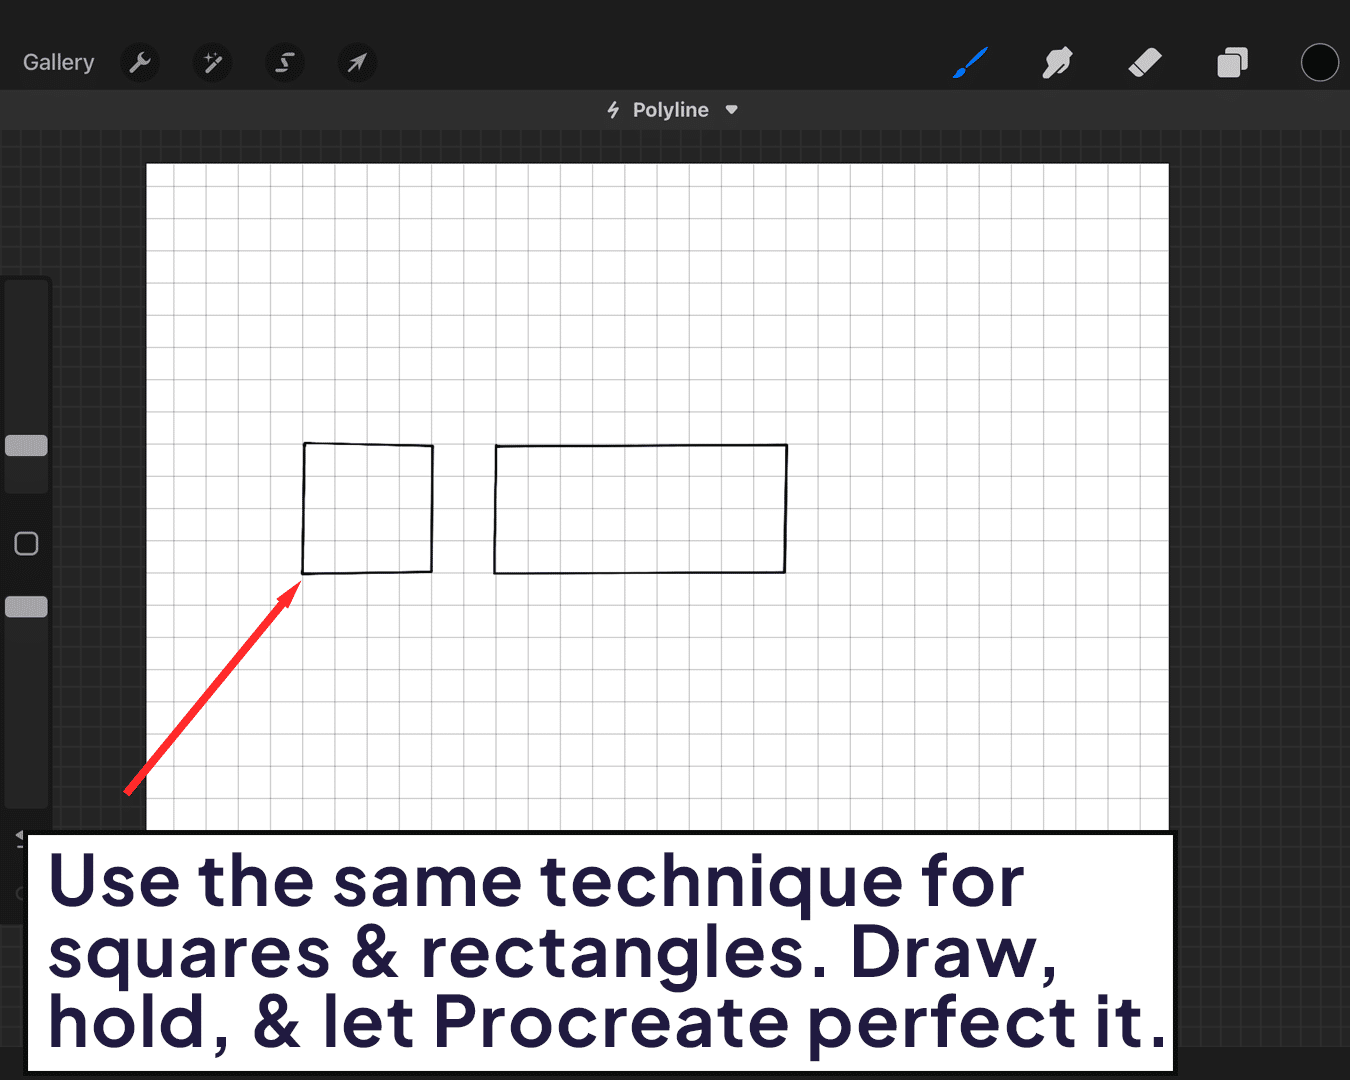 Same technique for squares & rectangles